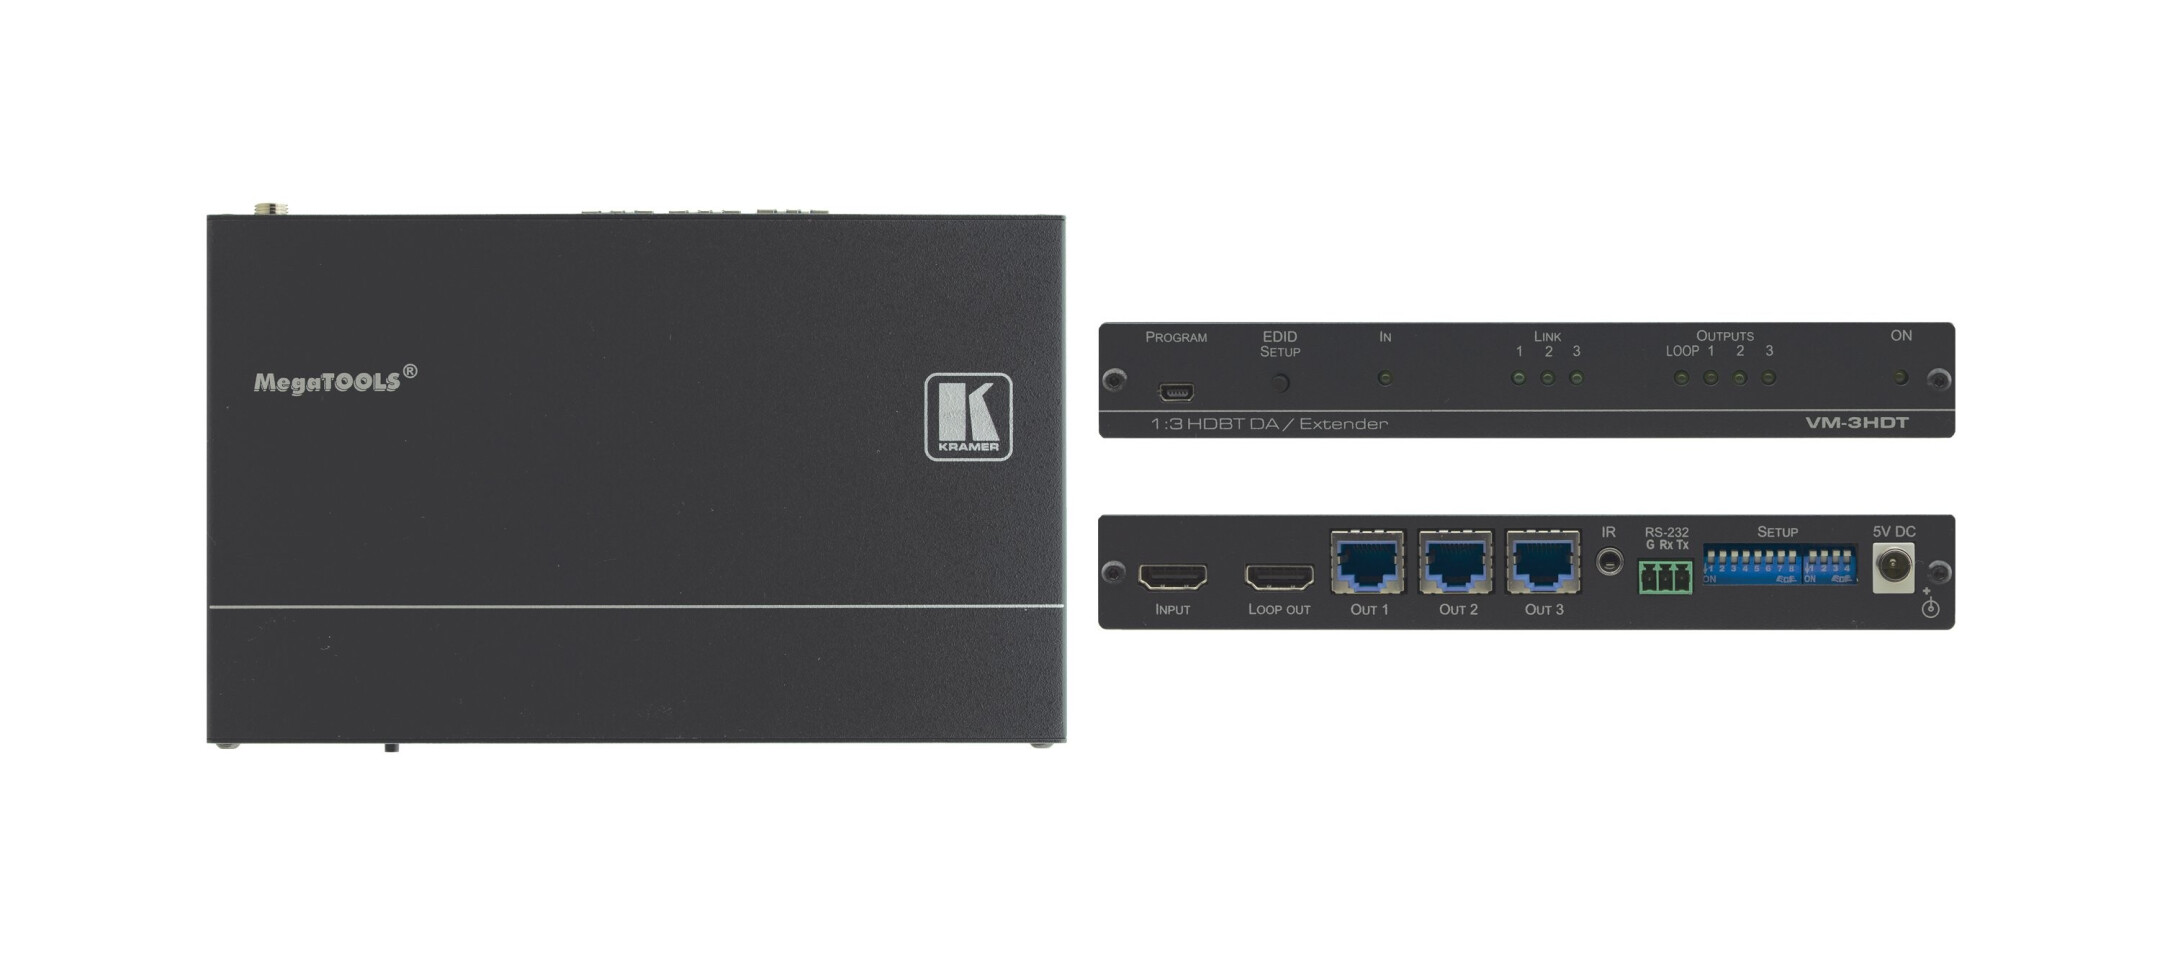 Kramer-VM-3HDT1-3-1-4K-60-4-2-0-HDMI-Long-Reach-HDBaseT-Verteilverstarker